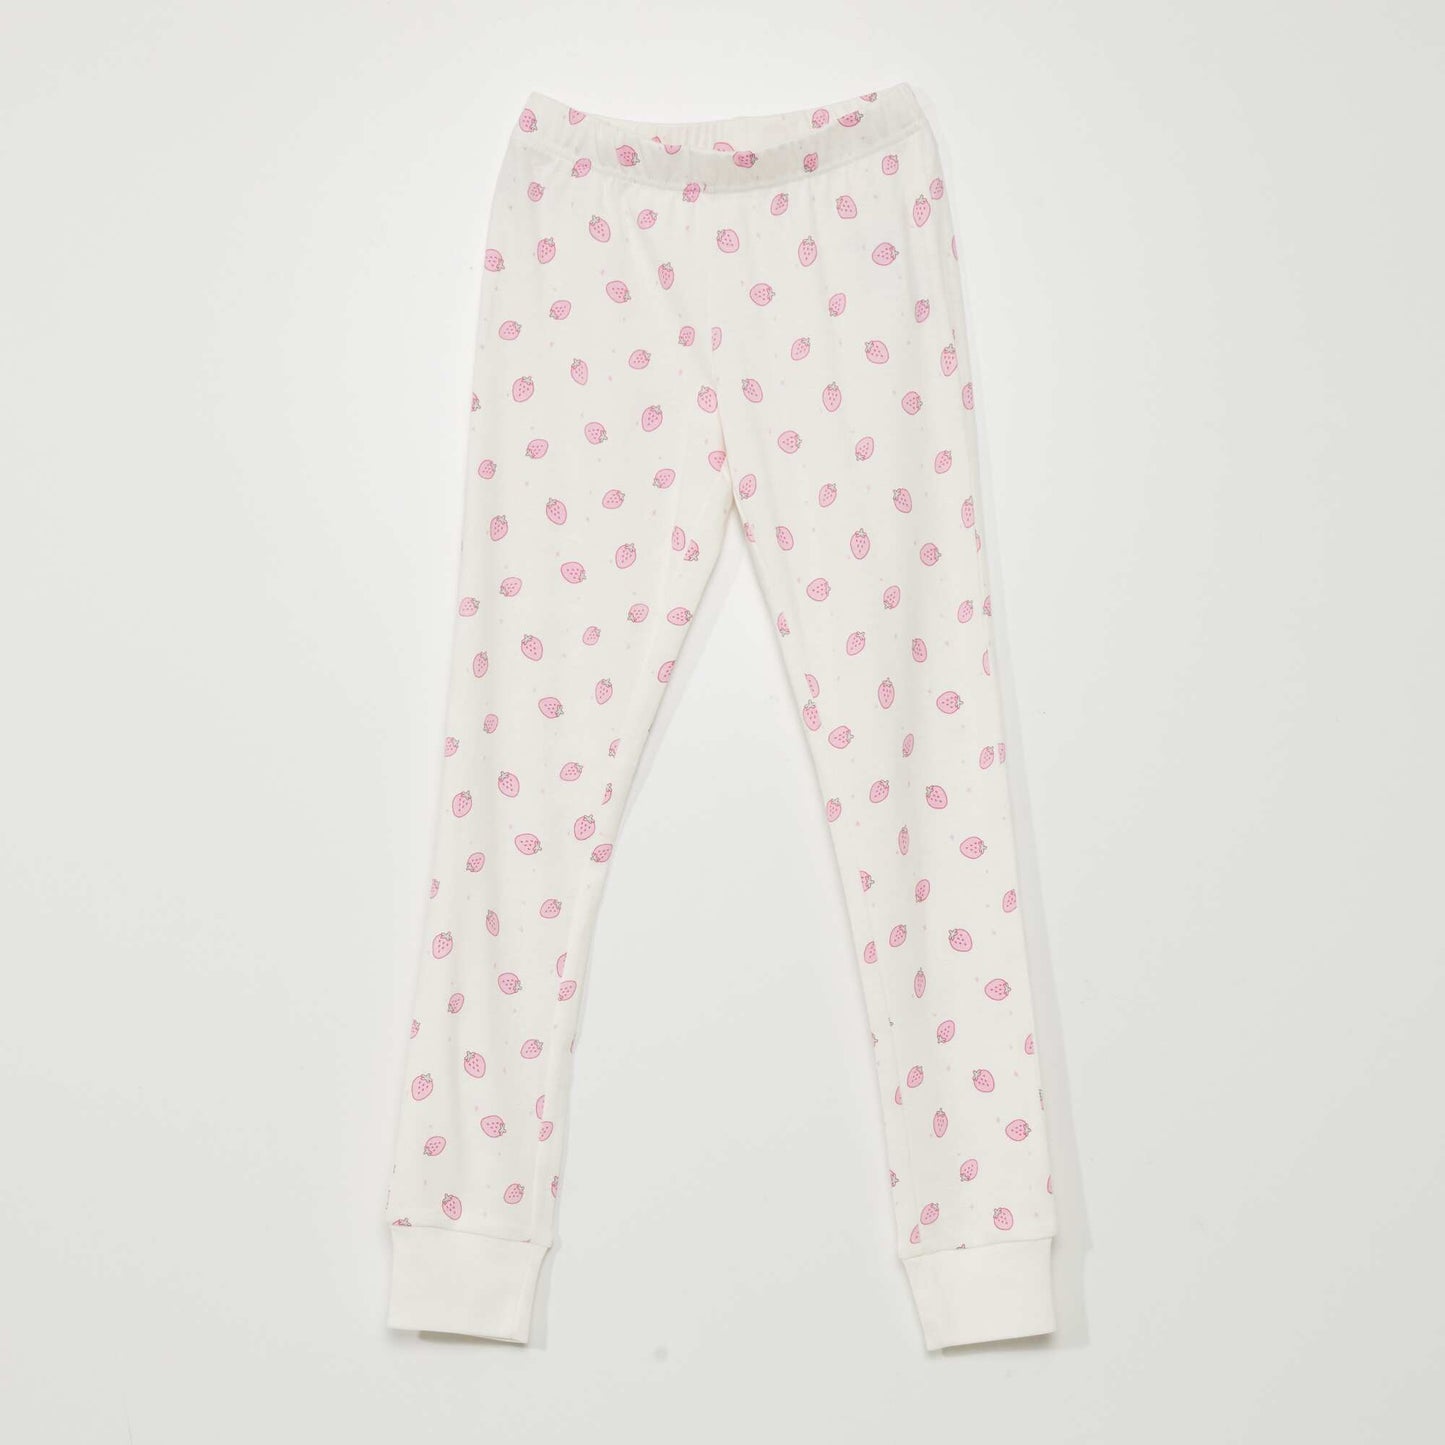 Long pyjamas - Strawberry print - 2-piece set PINK